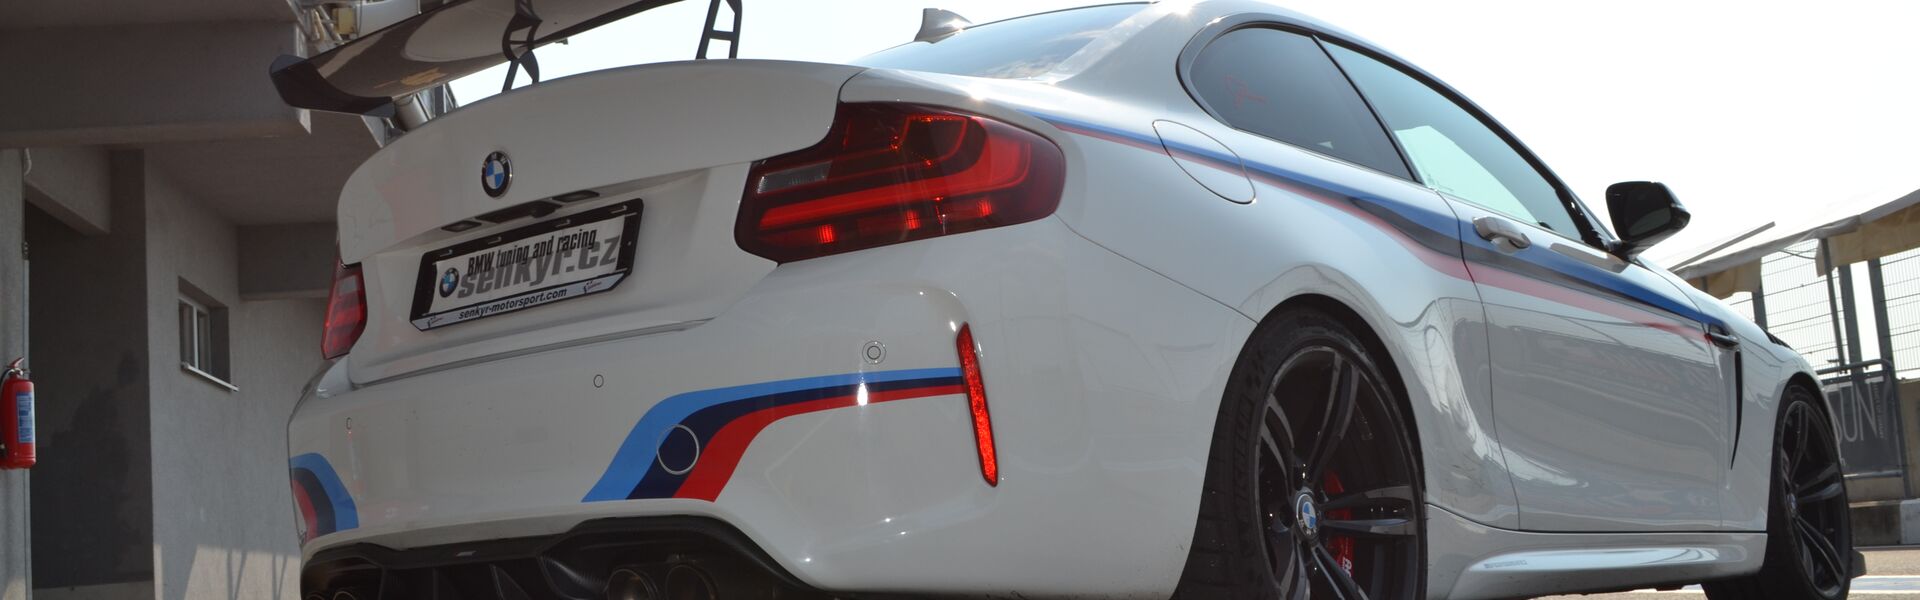 Bodykit/ Aerodynamické prvky pro automobil BMW M3 E30